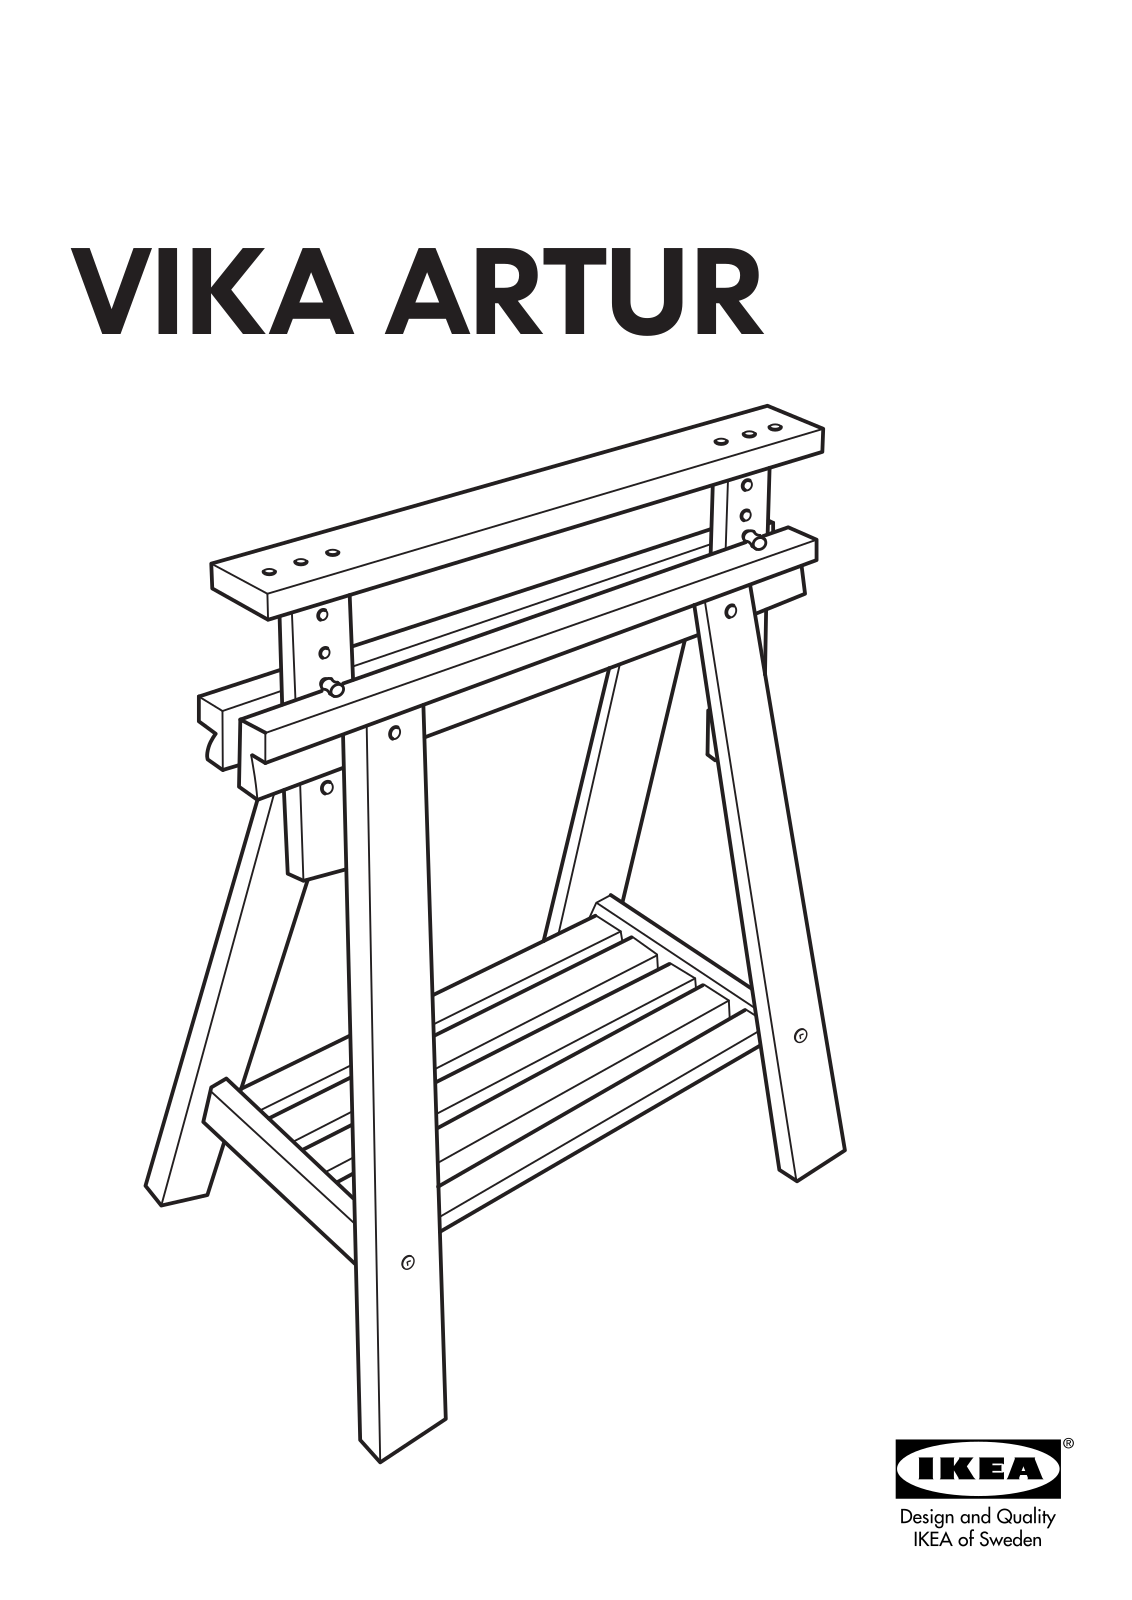 IKEA VIKA ARTUR TRESTLE W SHELF 28X2837 Assembly Instruction